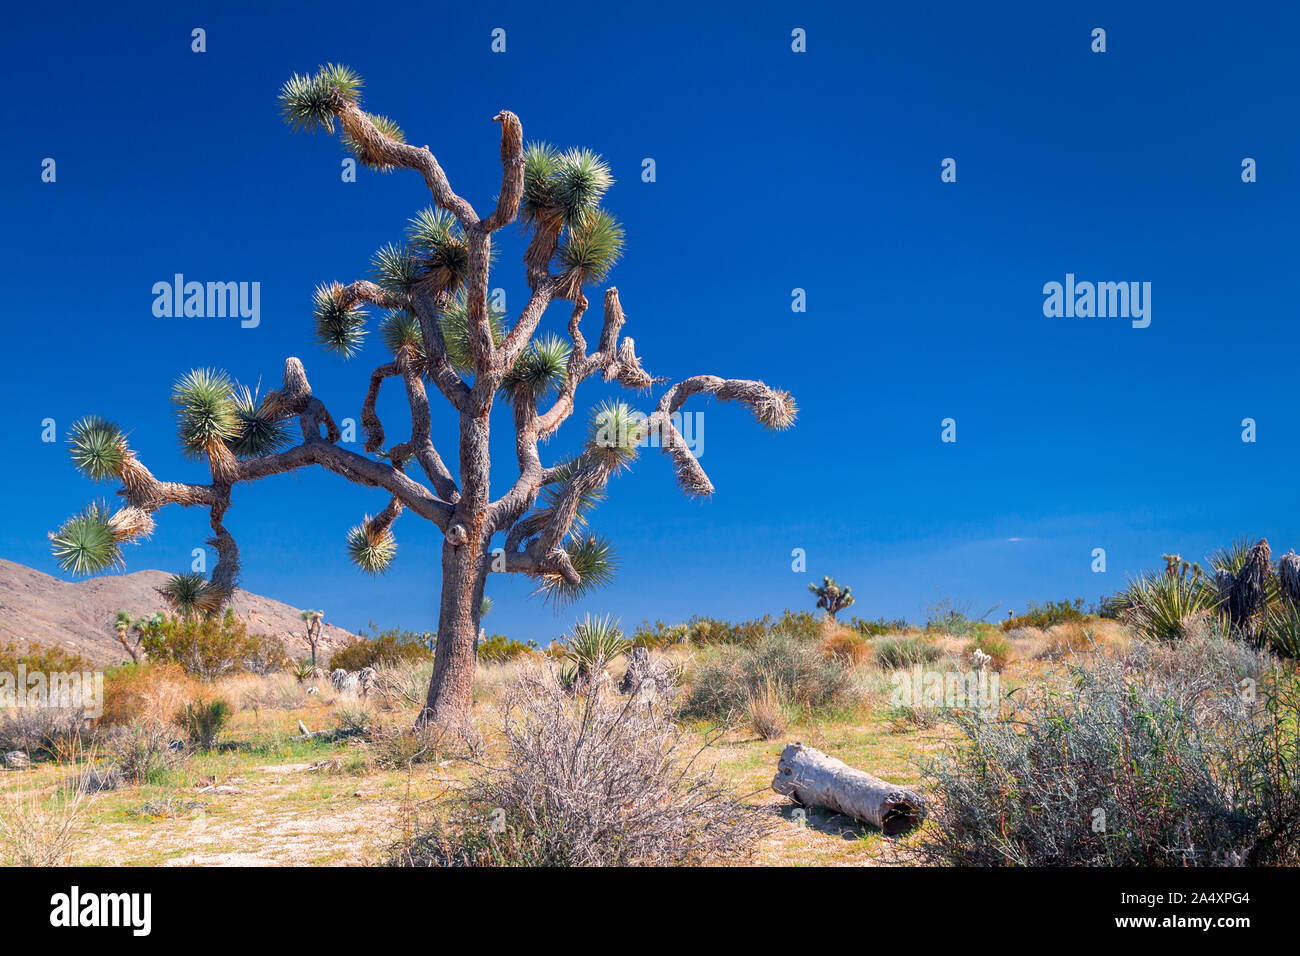 Joshua tree against a clear blue sky Stock Photo